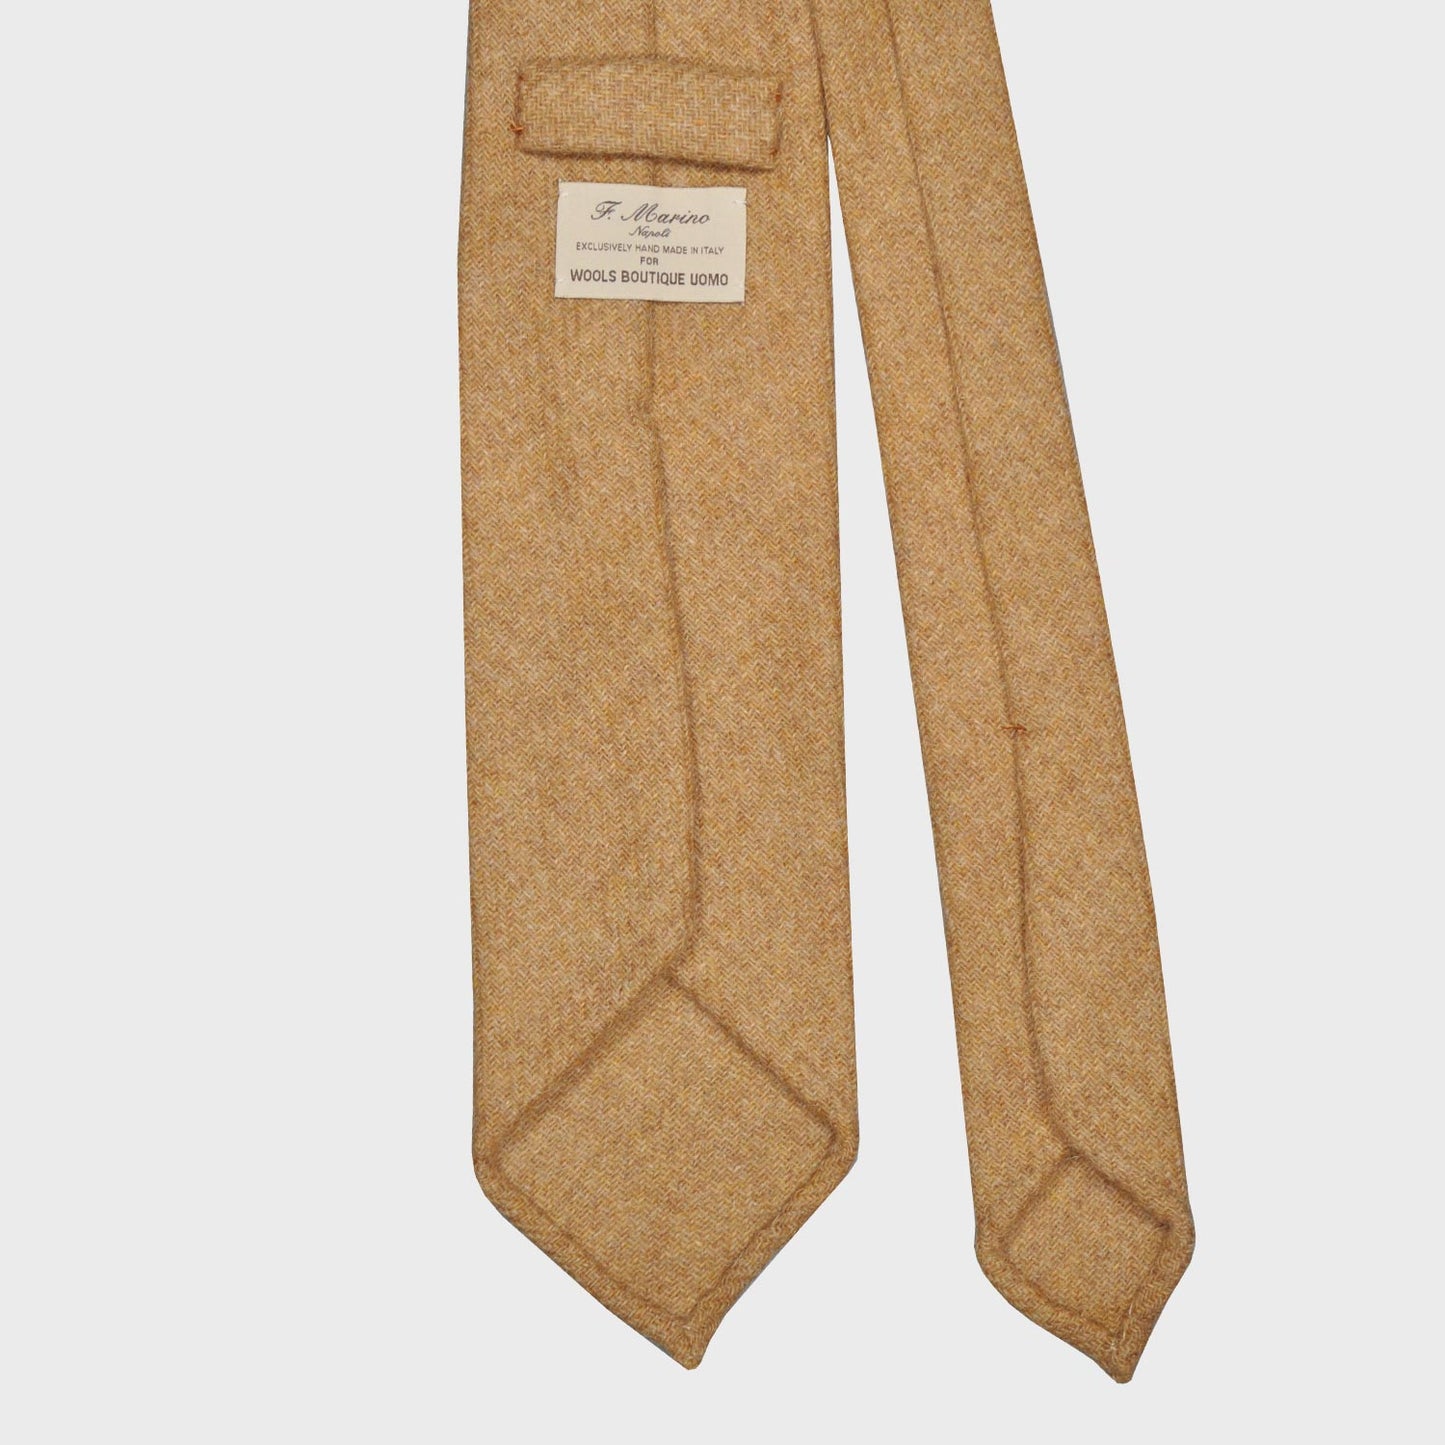 F.Marino Tweed Tie 3 Folds Camel-Wools Boutique Uomo